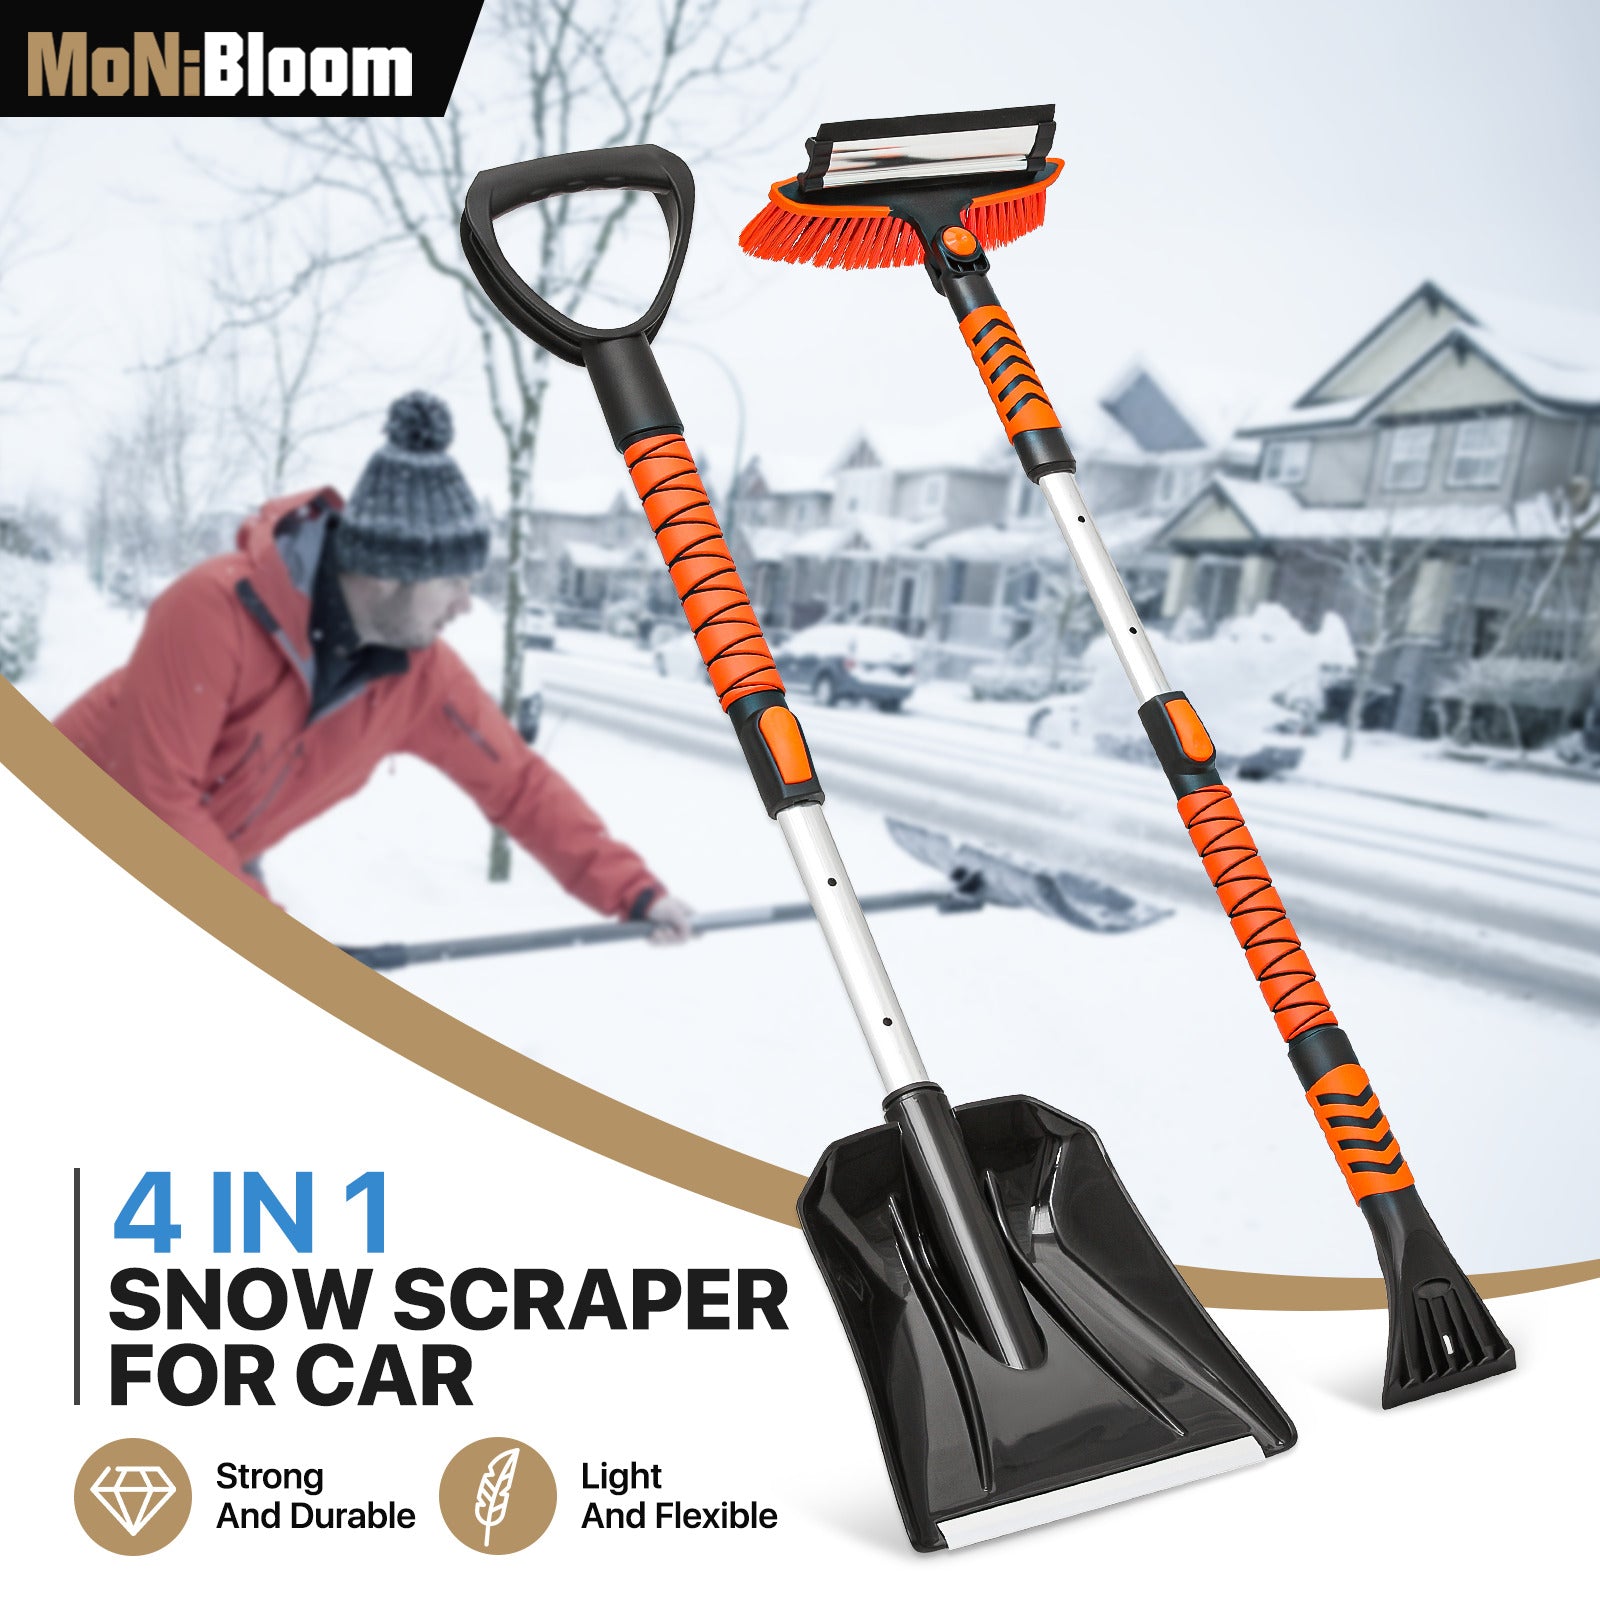 4 in 1 Snow Scraper for Car - 2.5 to 3.5 FT Height - Black Orange